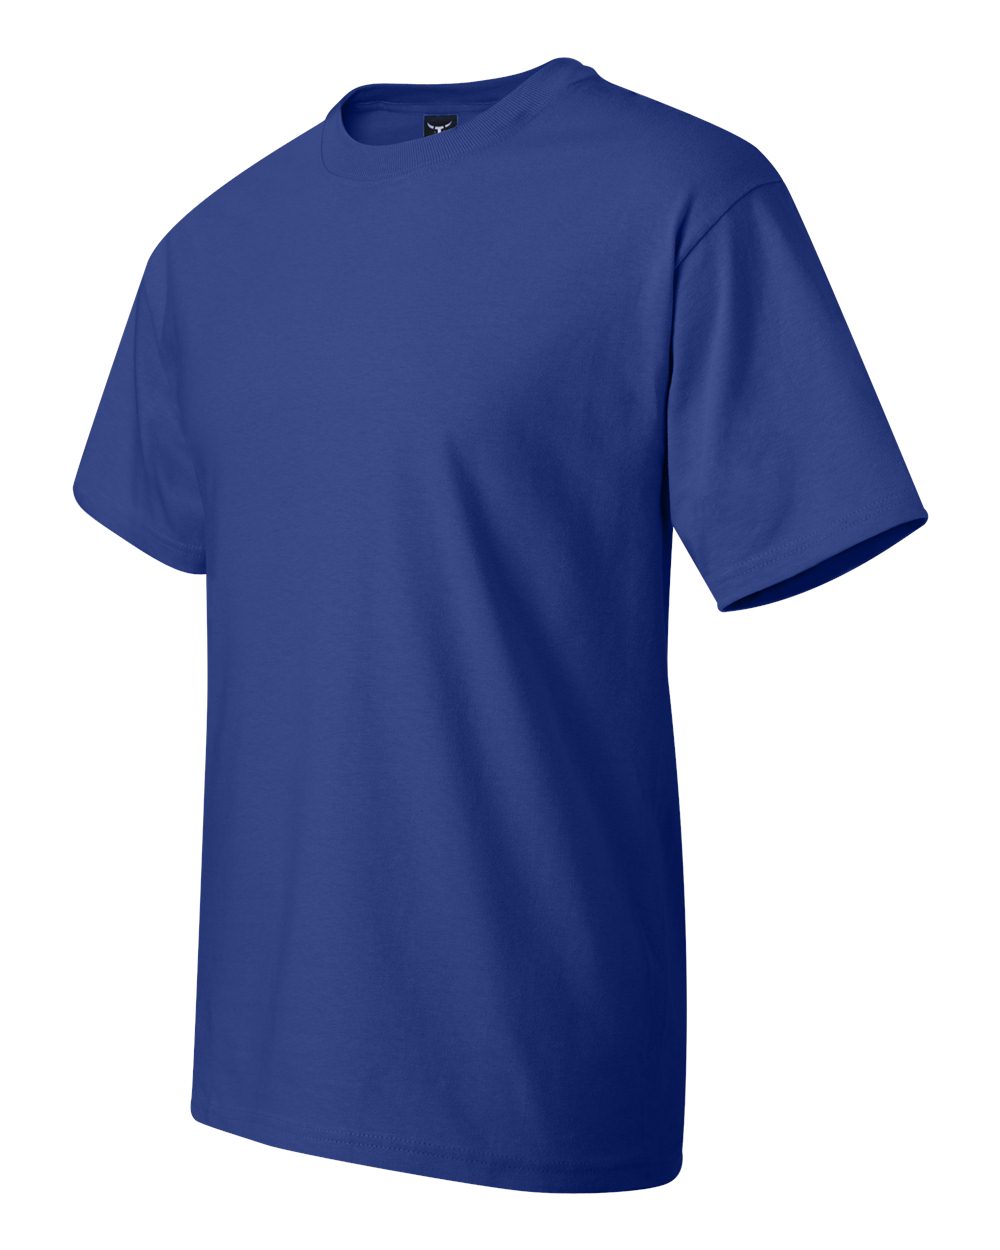 Hanes 518T - Beefy-T Tall T-Shirt